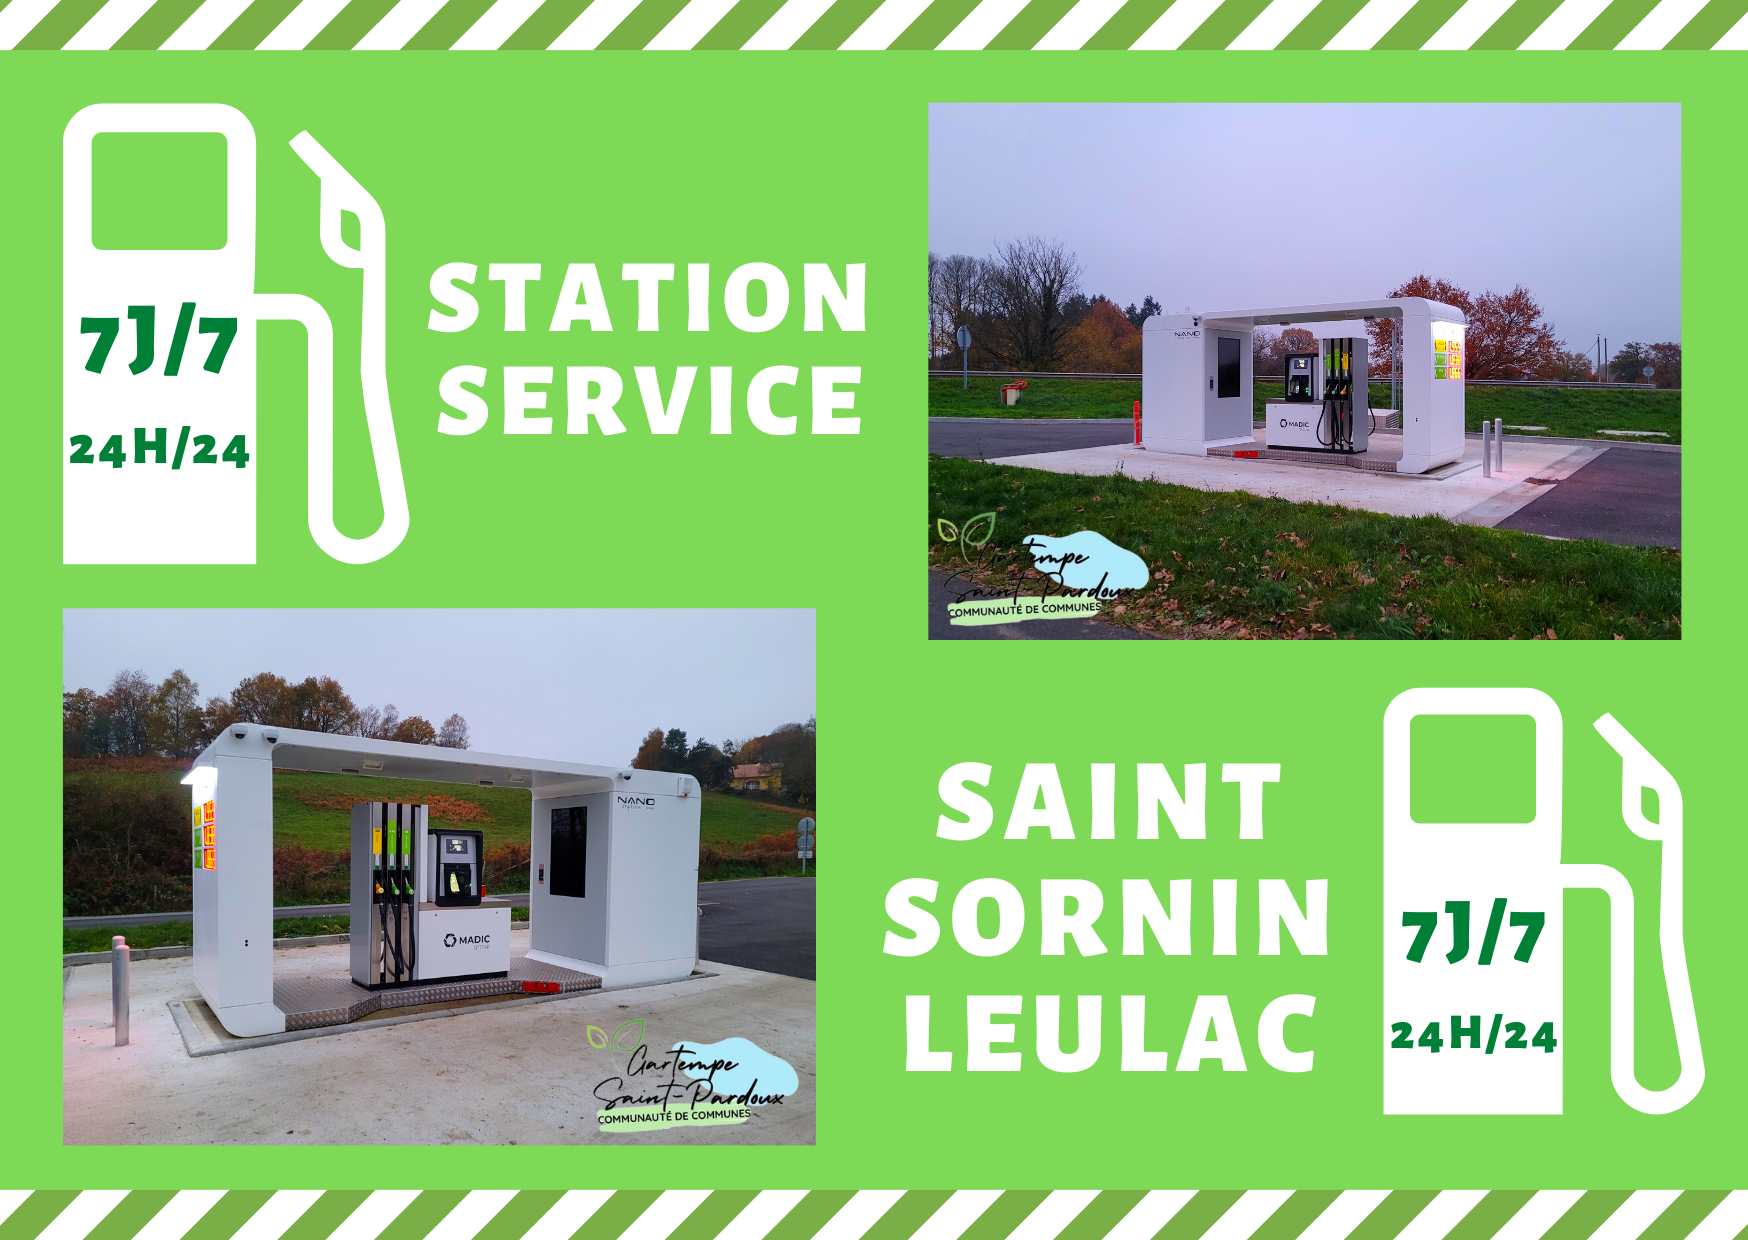 Station service st sornin vert.png